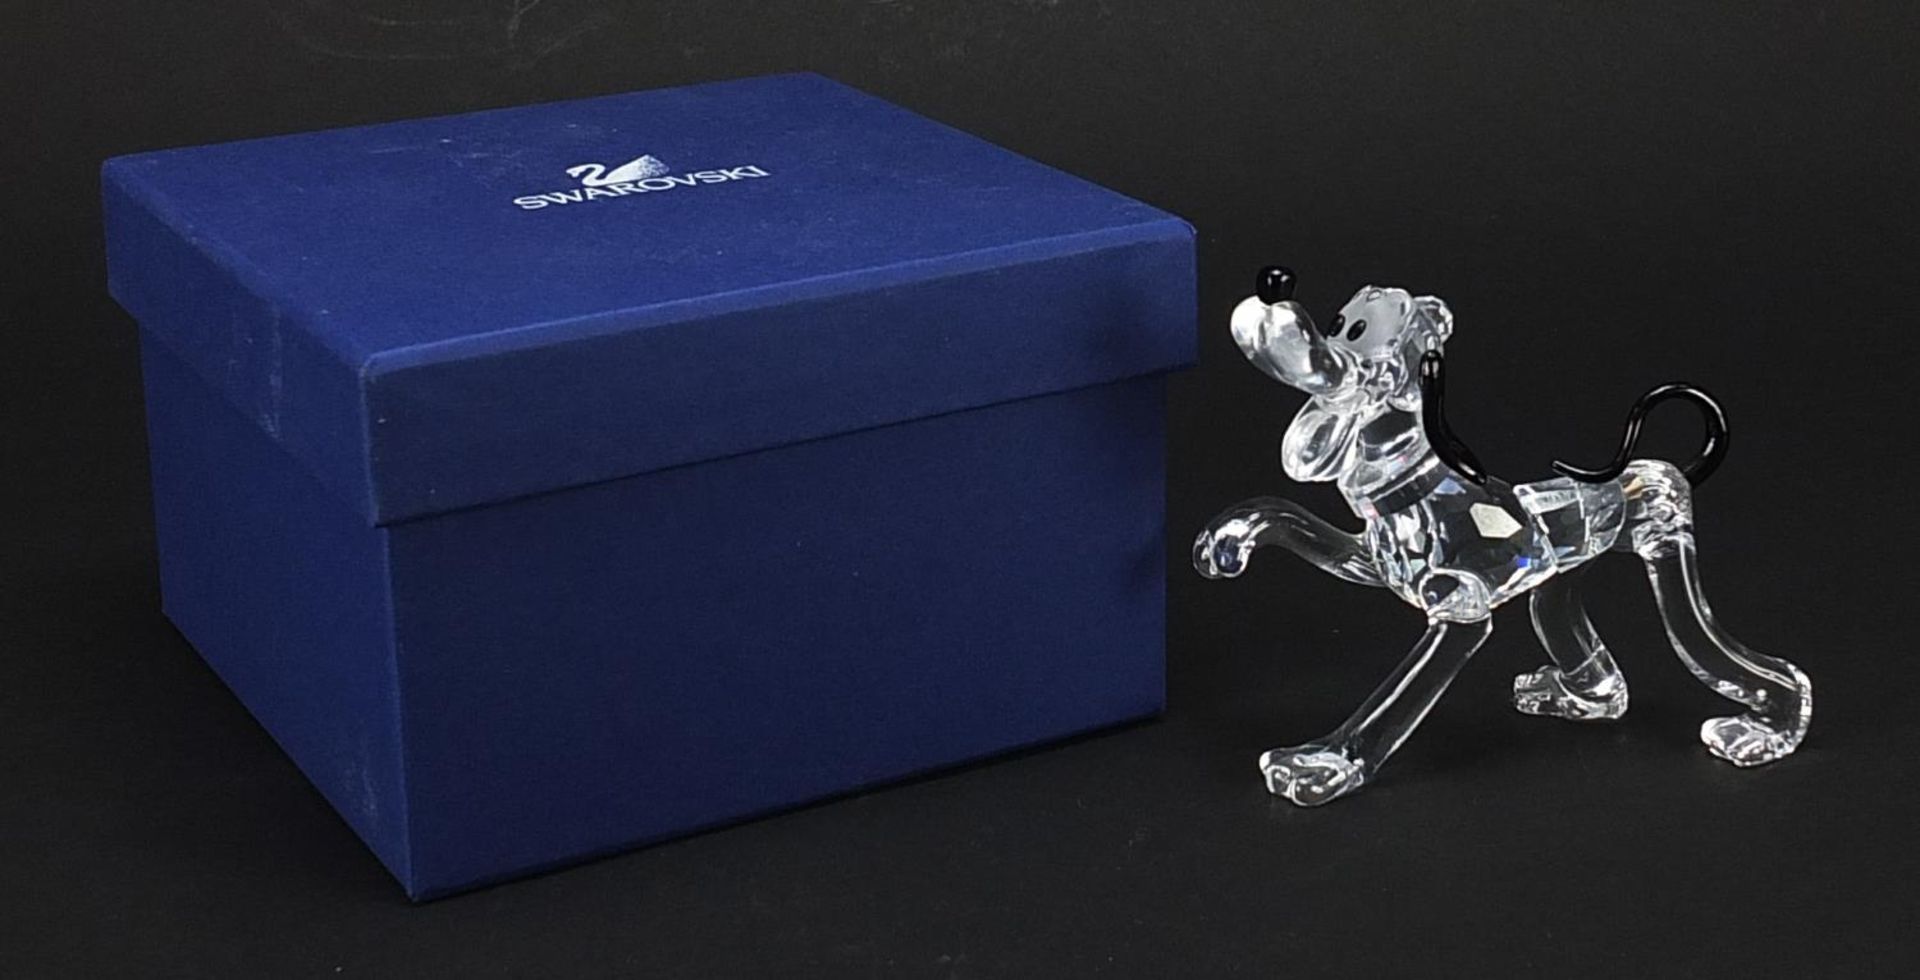 Swarovski Crystal Pluto Disney figure with box, 11cm in length